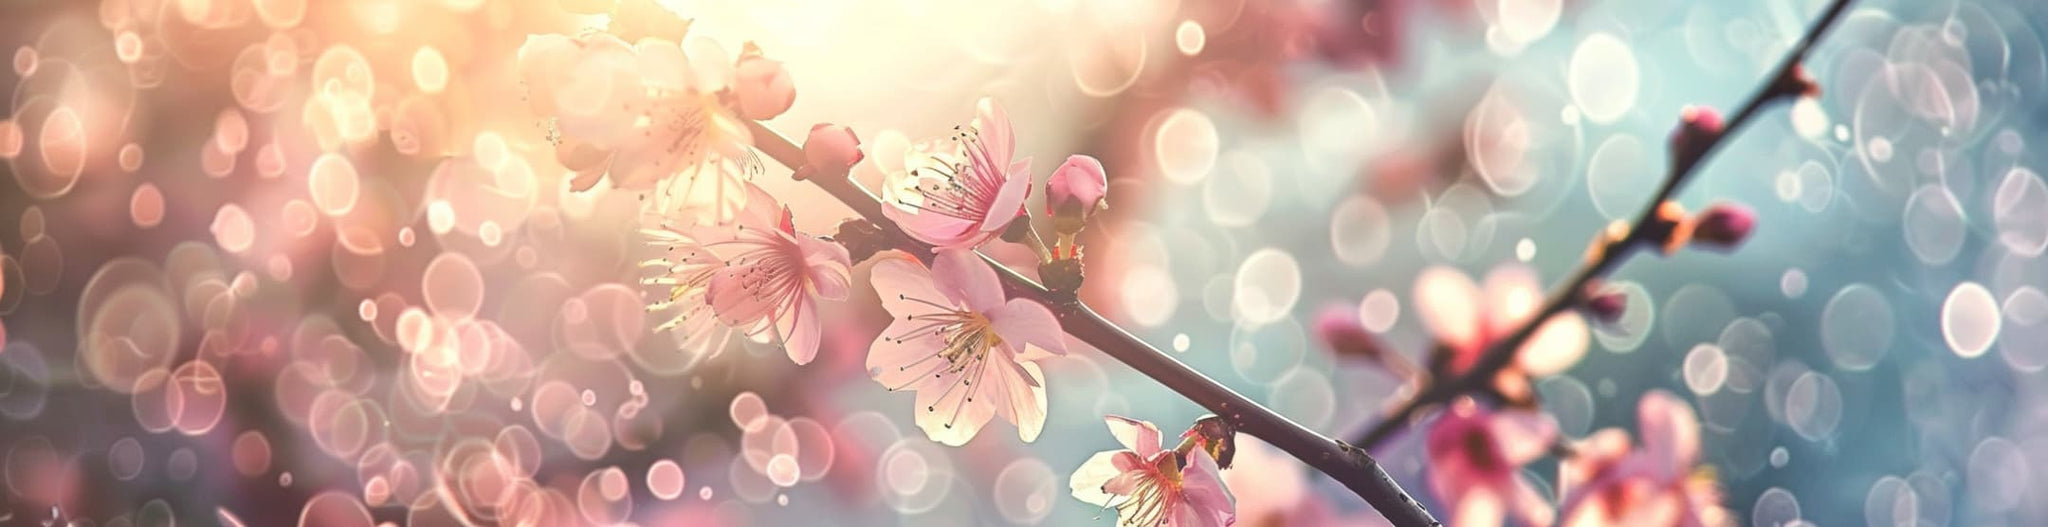 Embrace the freshness of Spring to rejuvenate your spirit